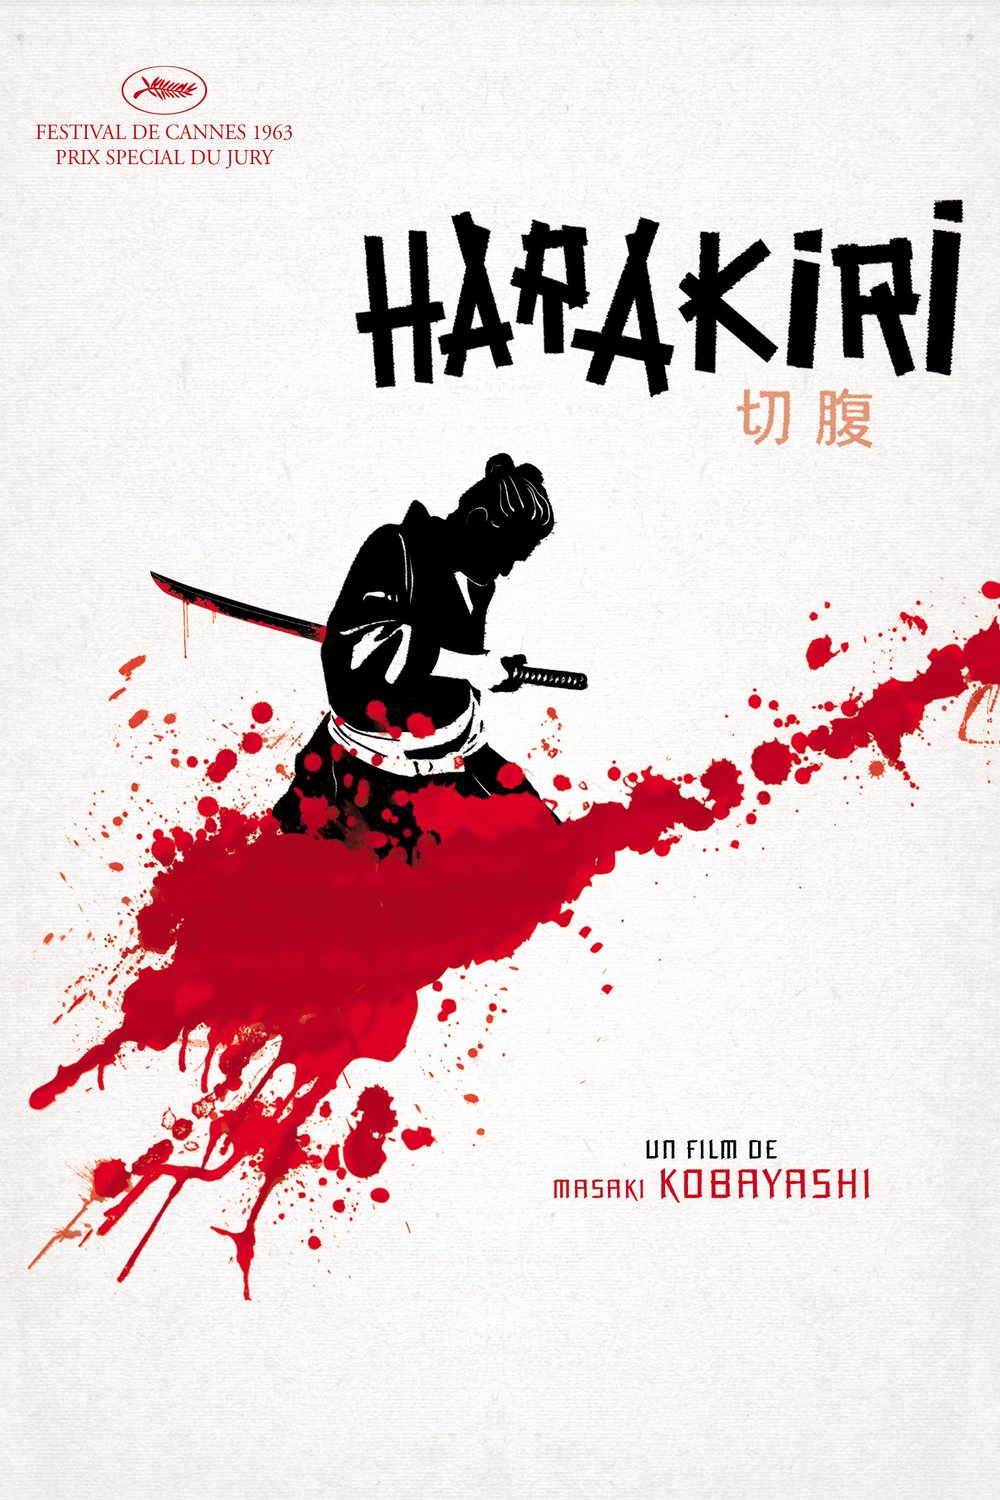 L'affiche du film Harakiri